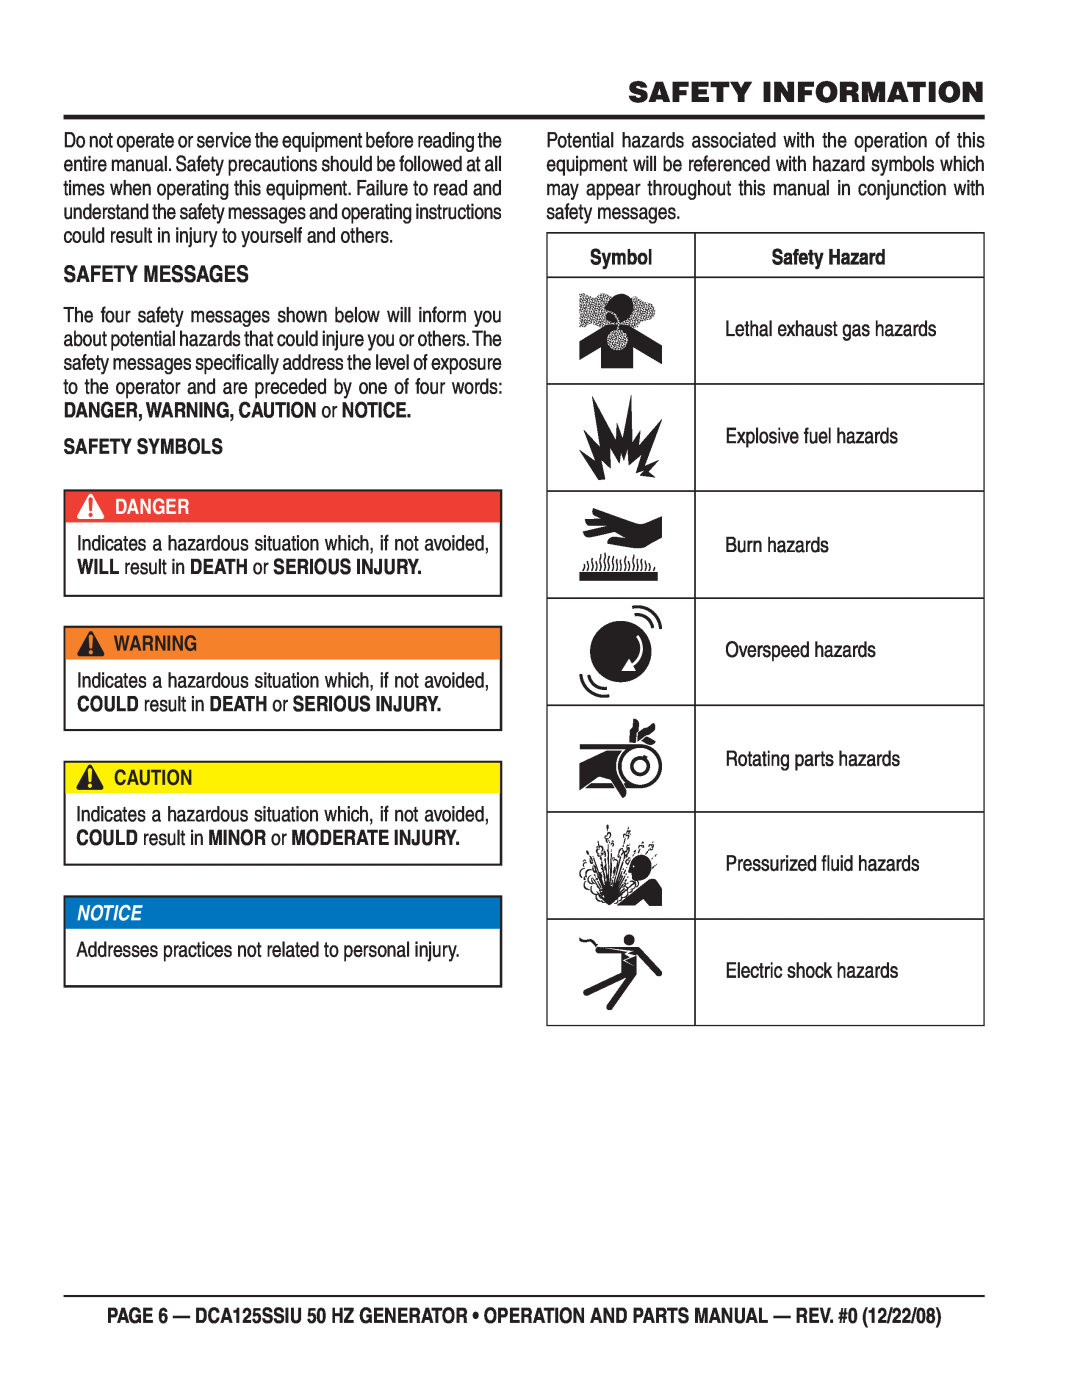 Multiquip DCA125SSIU manual Safety Information, Safety Messages, Safety Symbols, Danger, Notice 